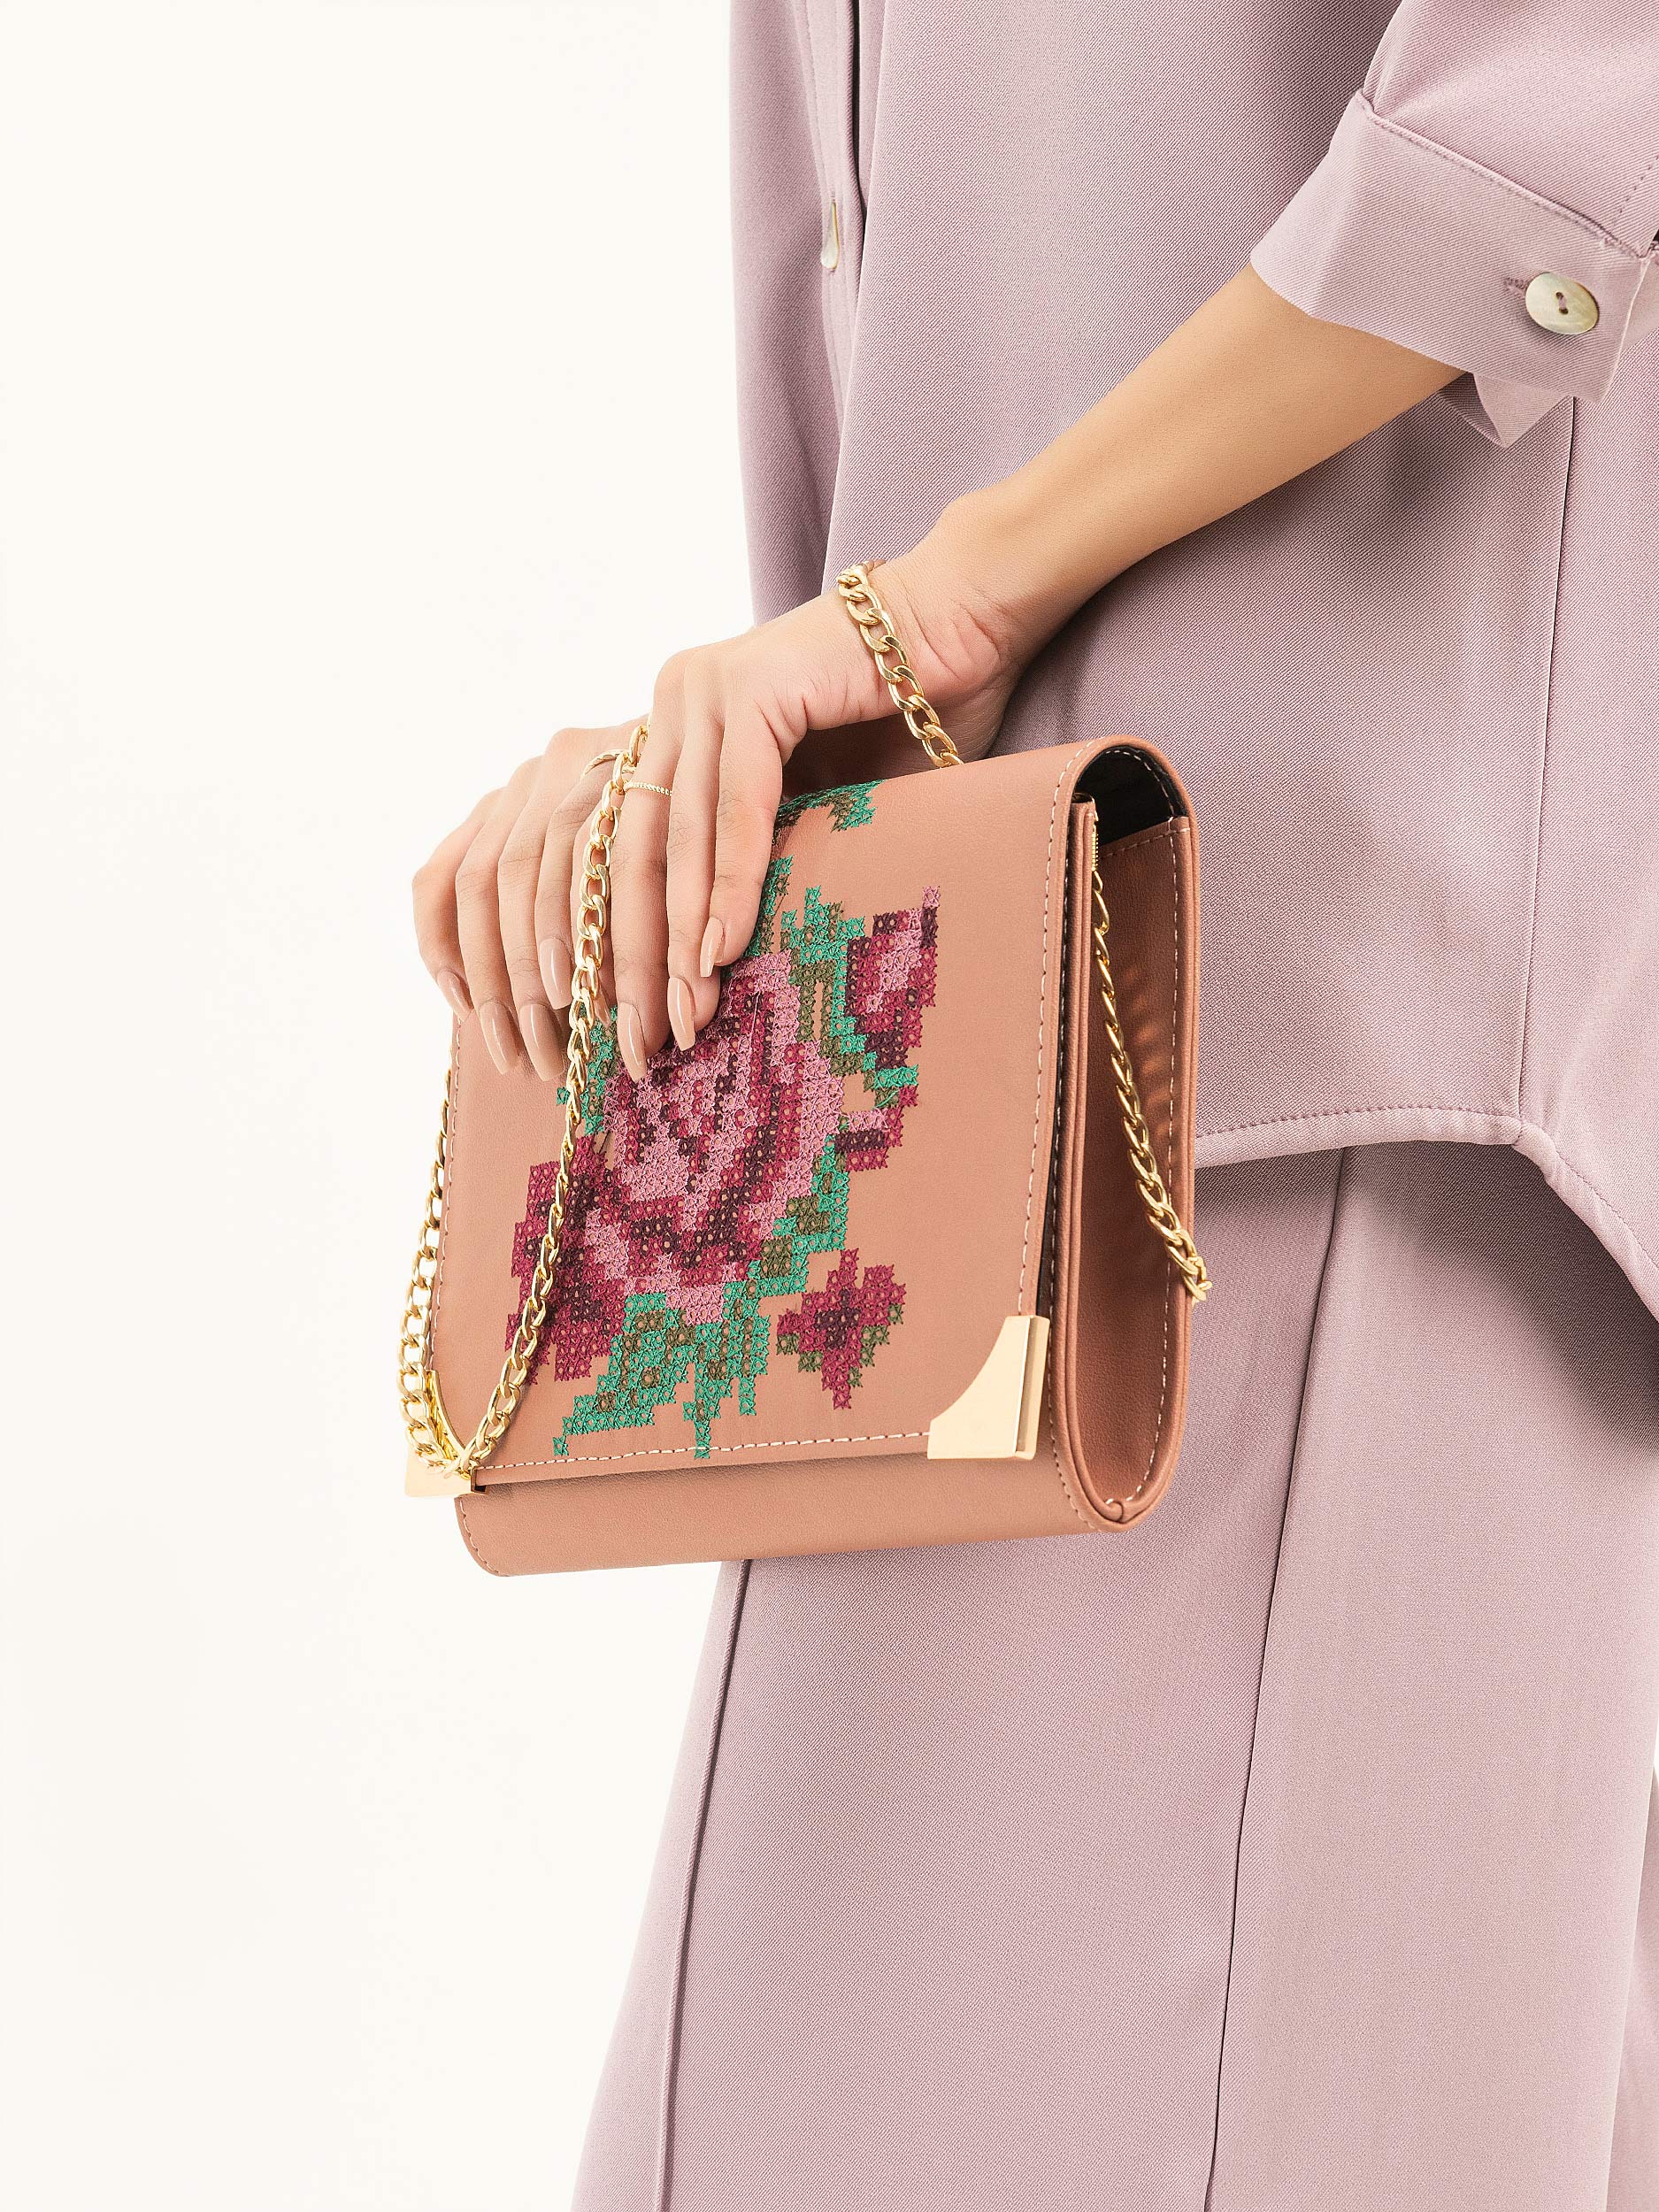 LIMELIGHT on Instagram: Rs. 2,399, Embroidered Handbag